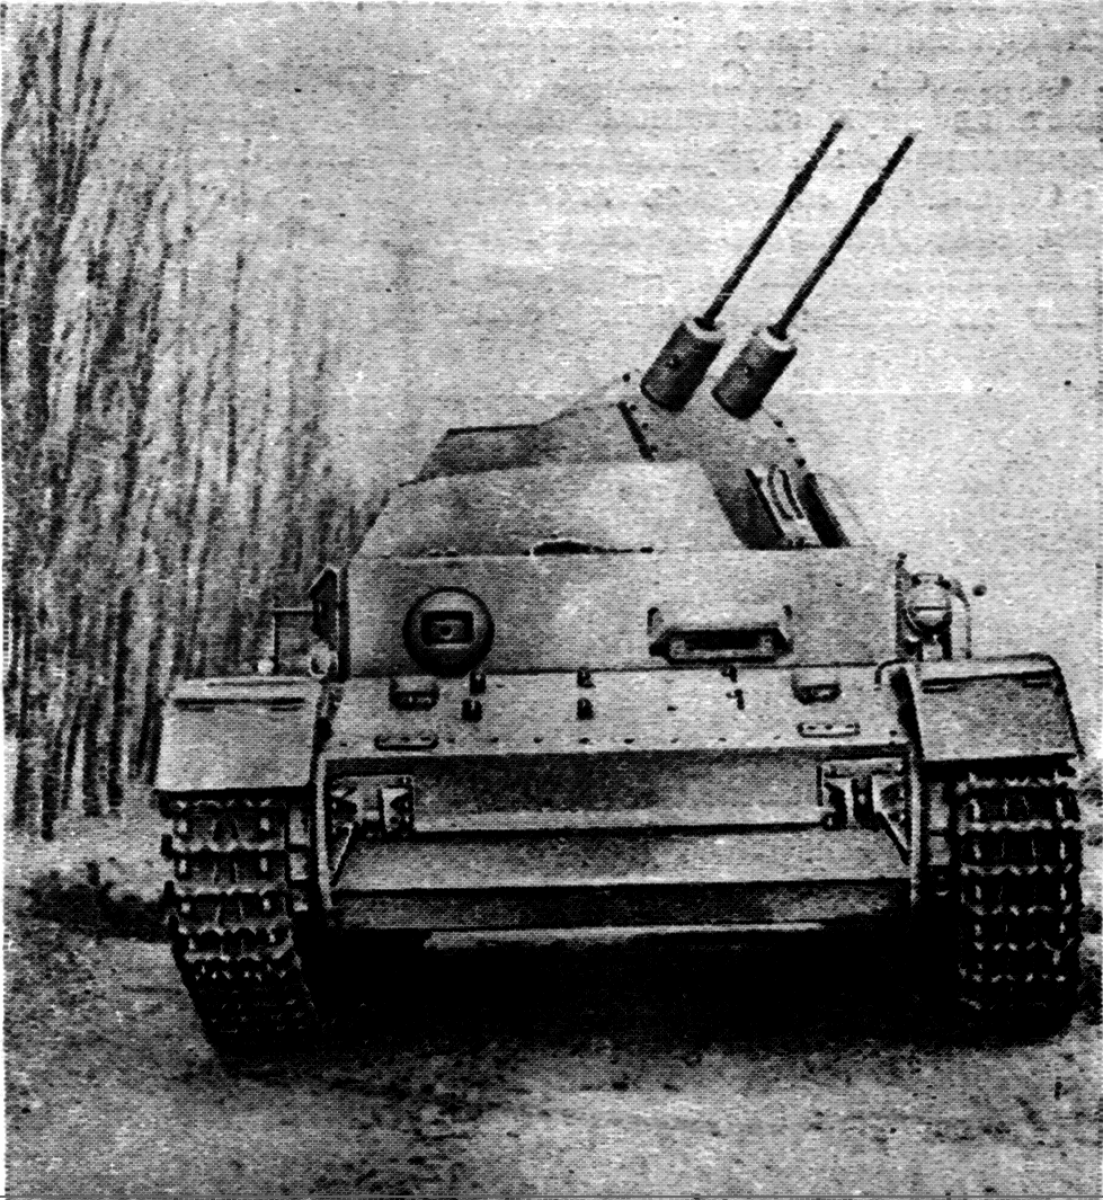 Flakpanzer IV Kugelblitz - 